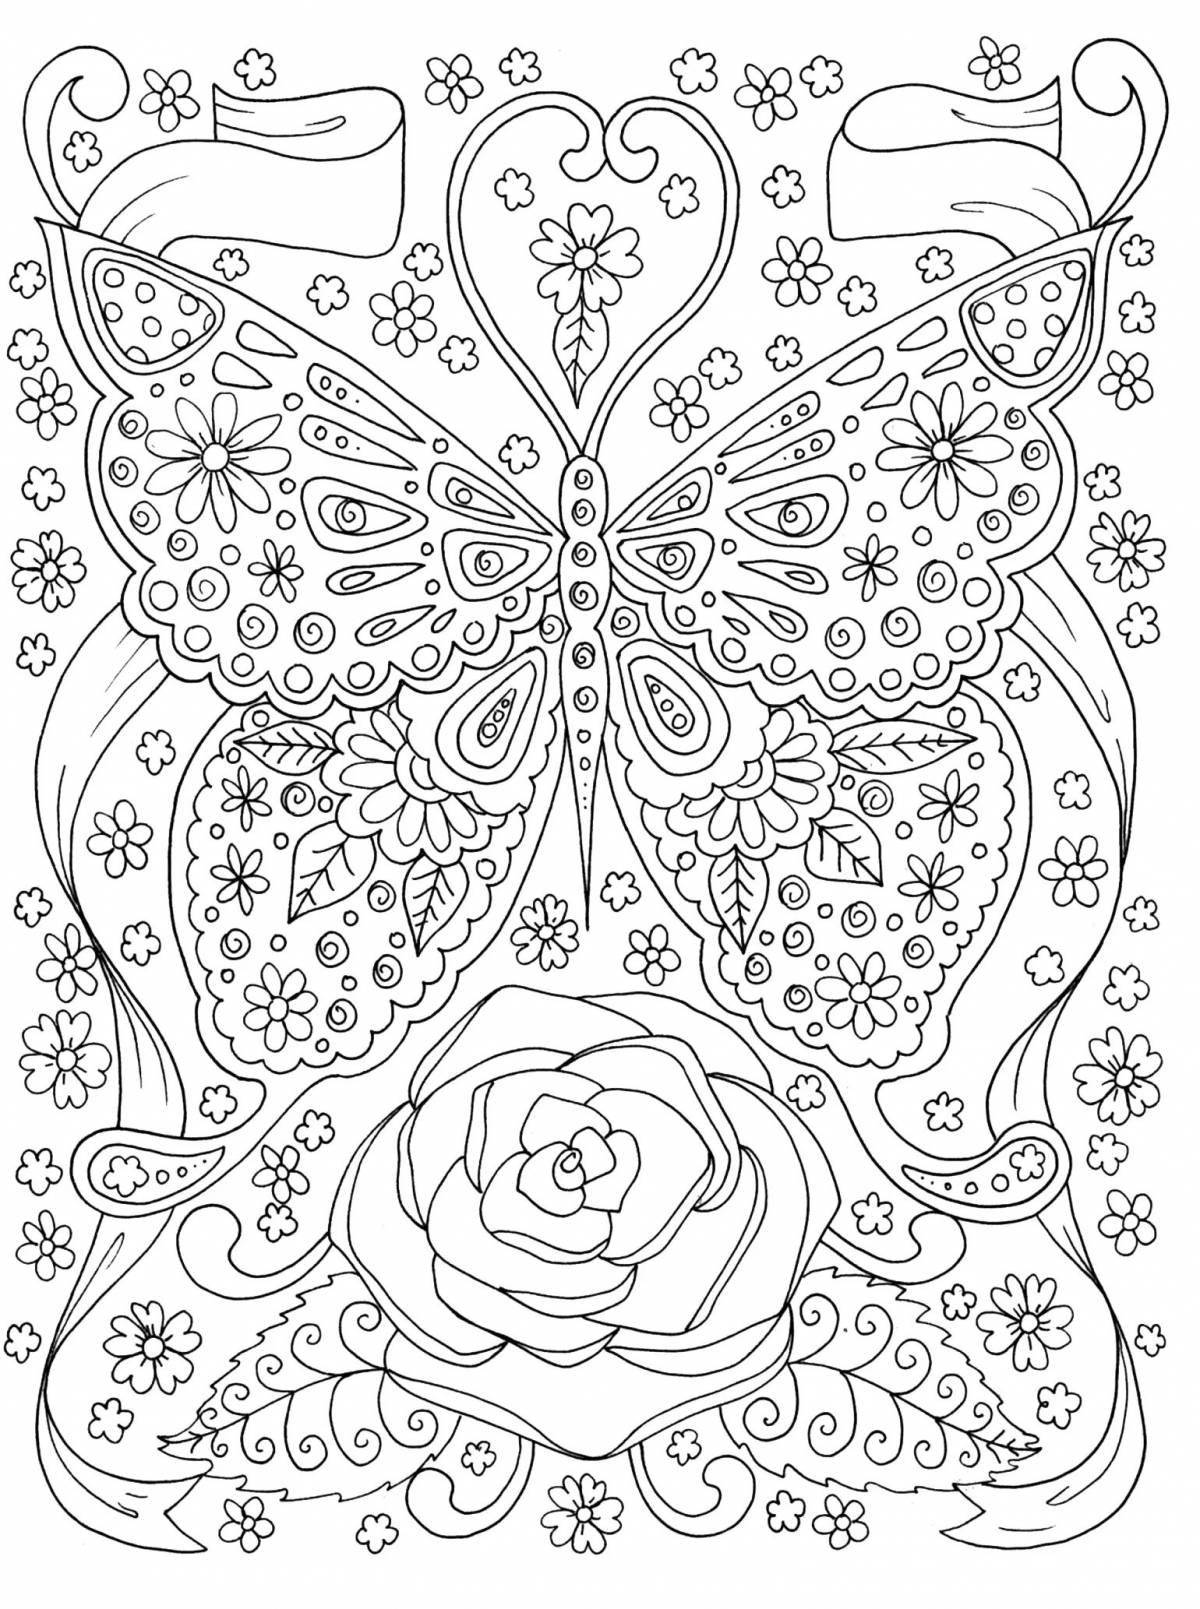 Royal coloring pages magic patterns